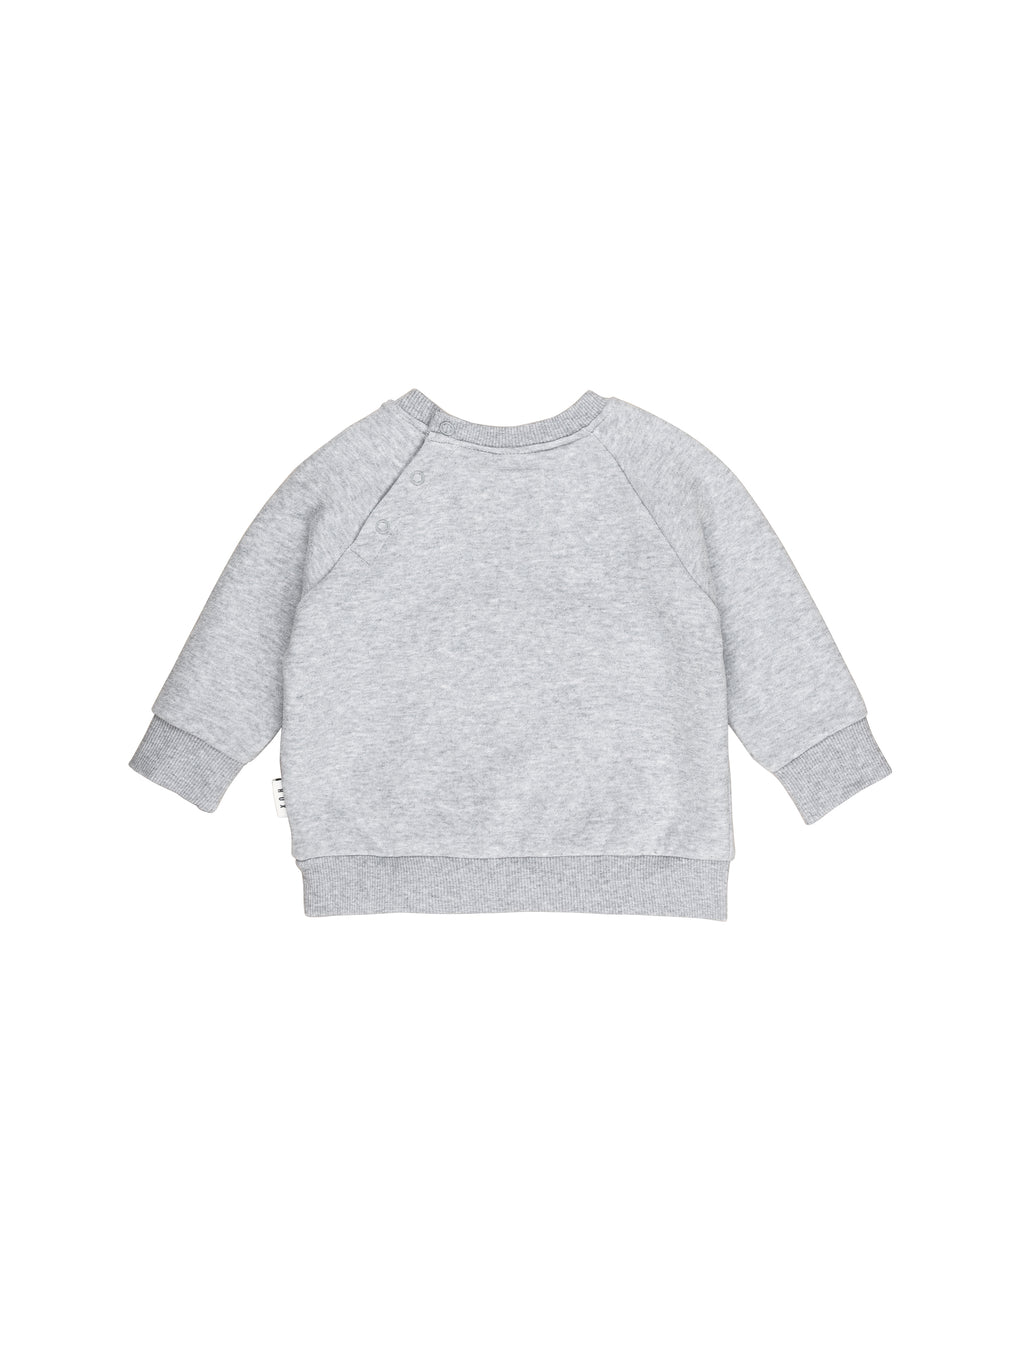 Designer Baby & Kids Clothes Online Australia - Huxbaby Rock Your Baby ...